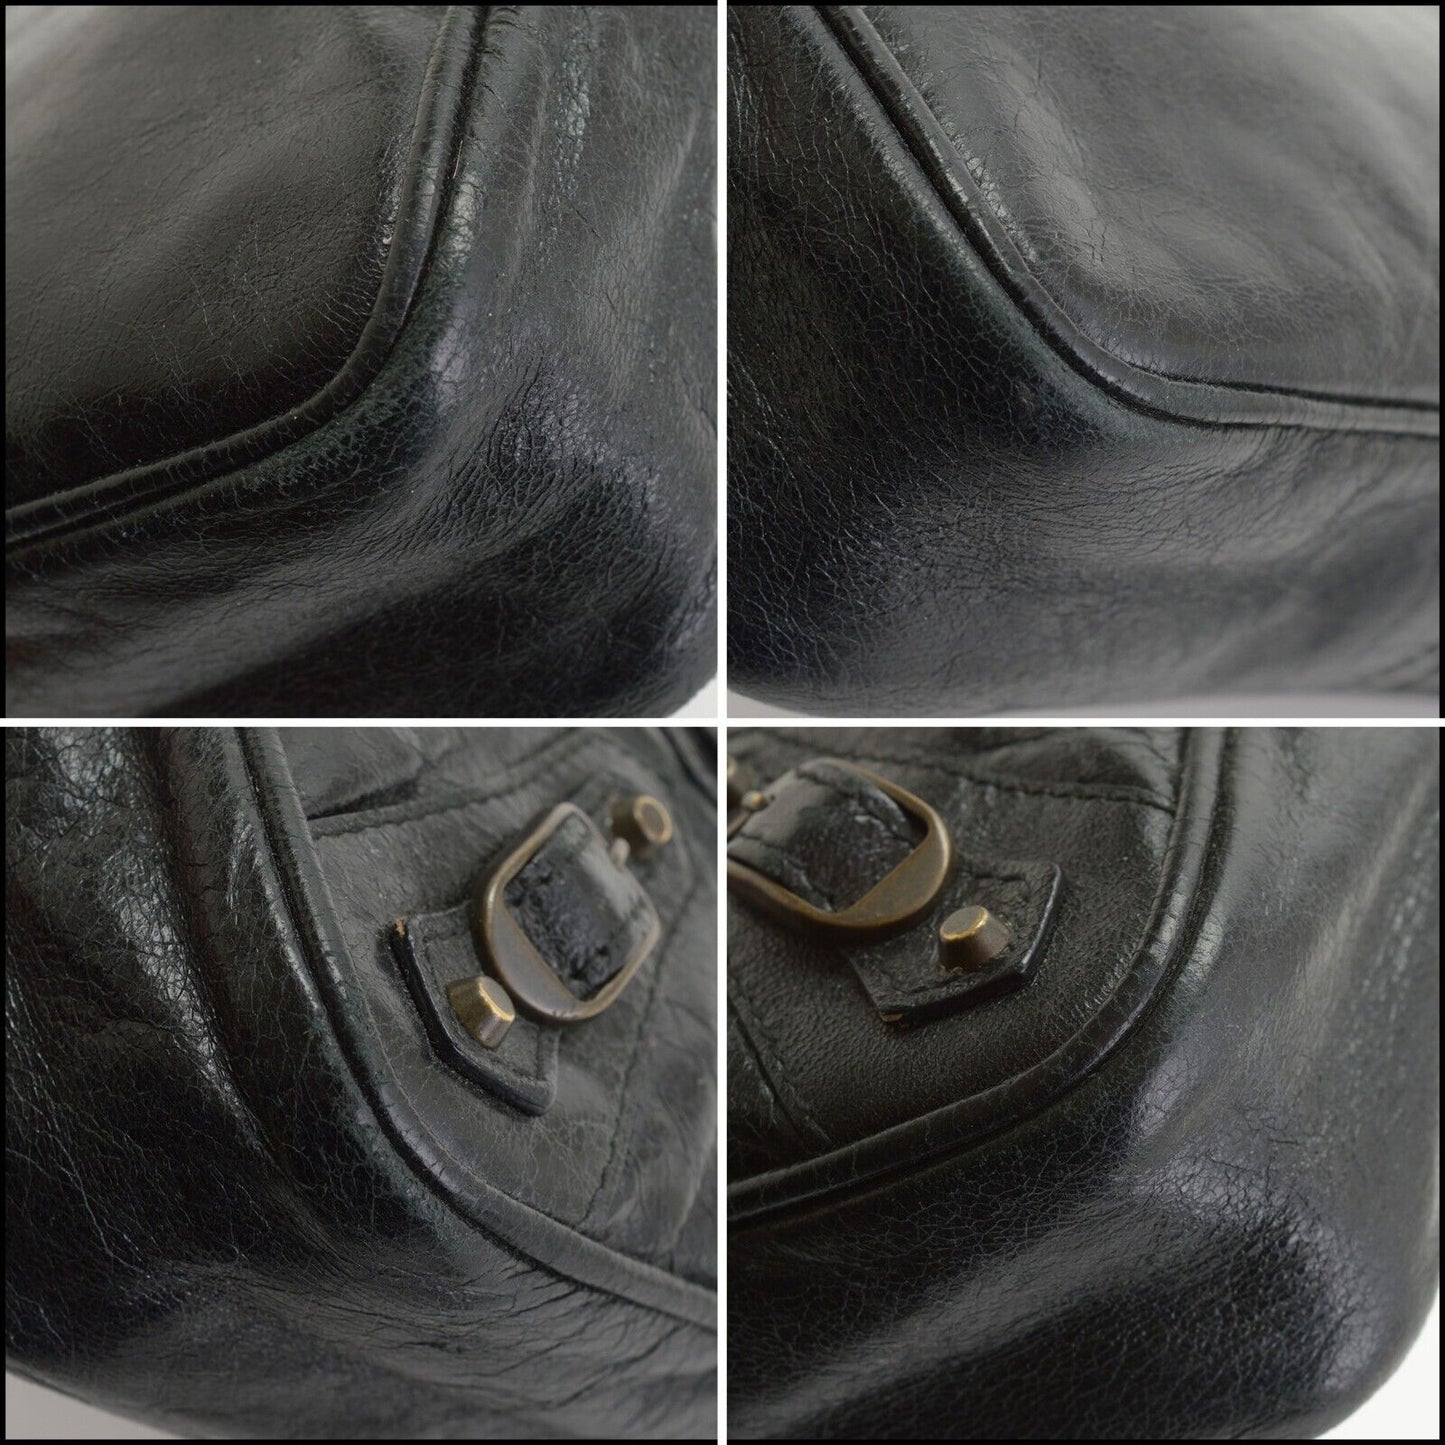 RDC13815 Authentic BALENCIAGA Black Leather Shoulder Pochette Bag